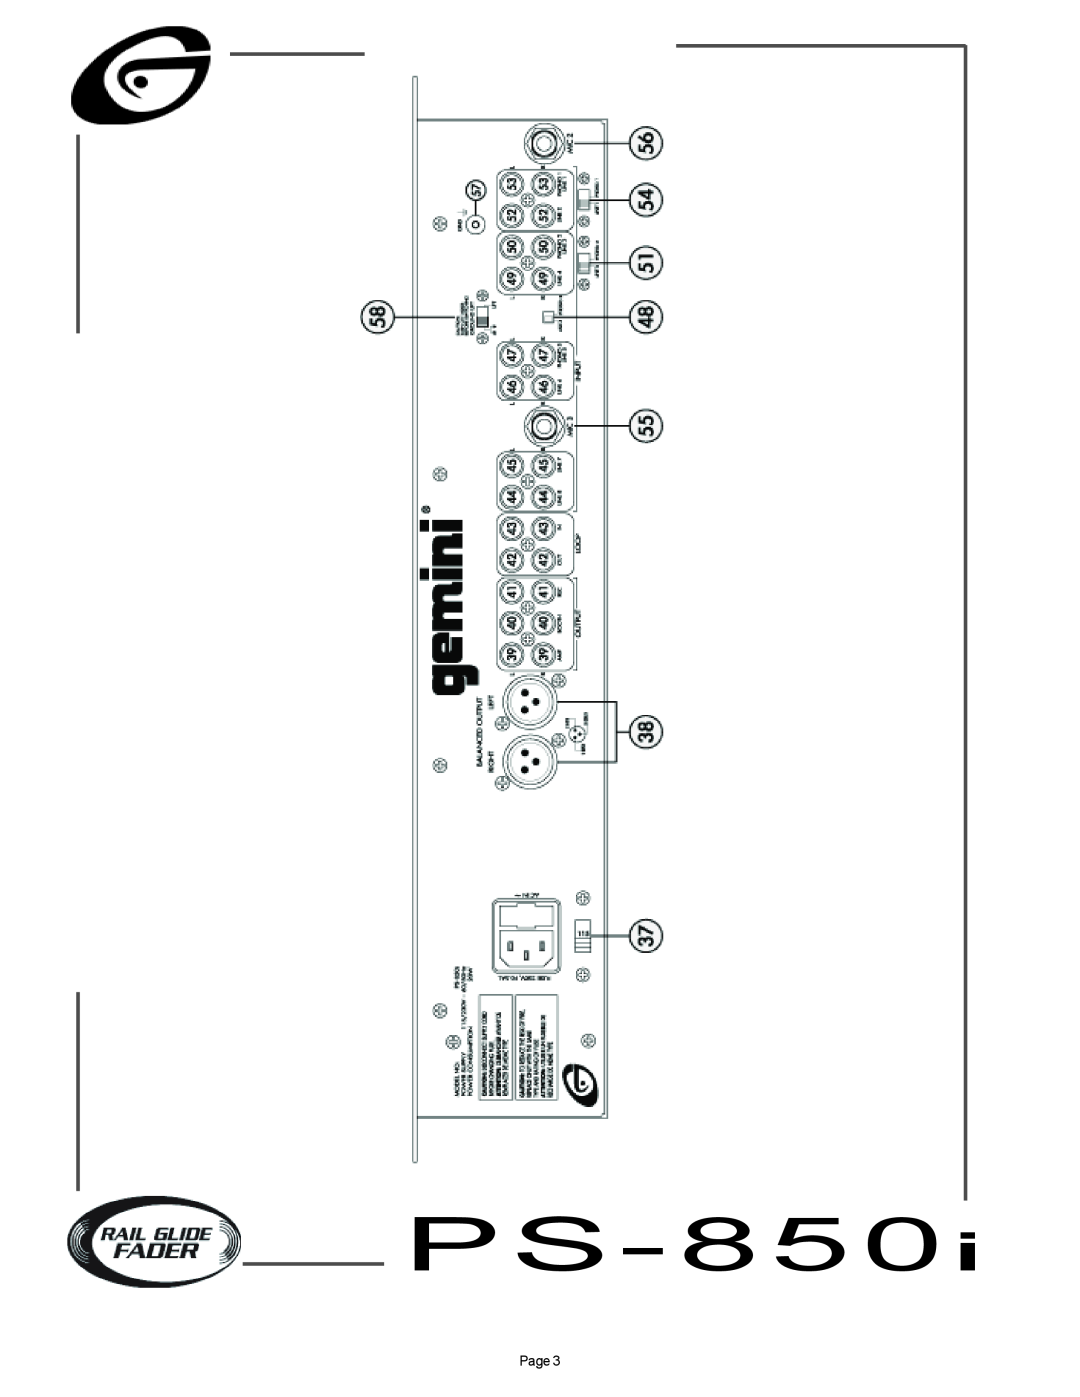 Gemini PS-850i manual PS - 850, Page 